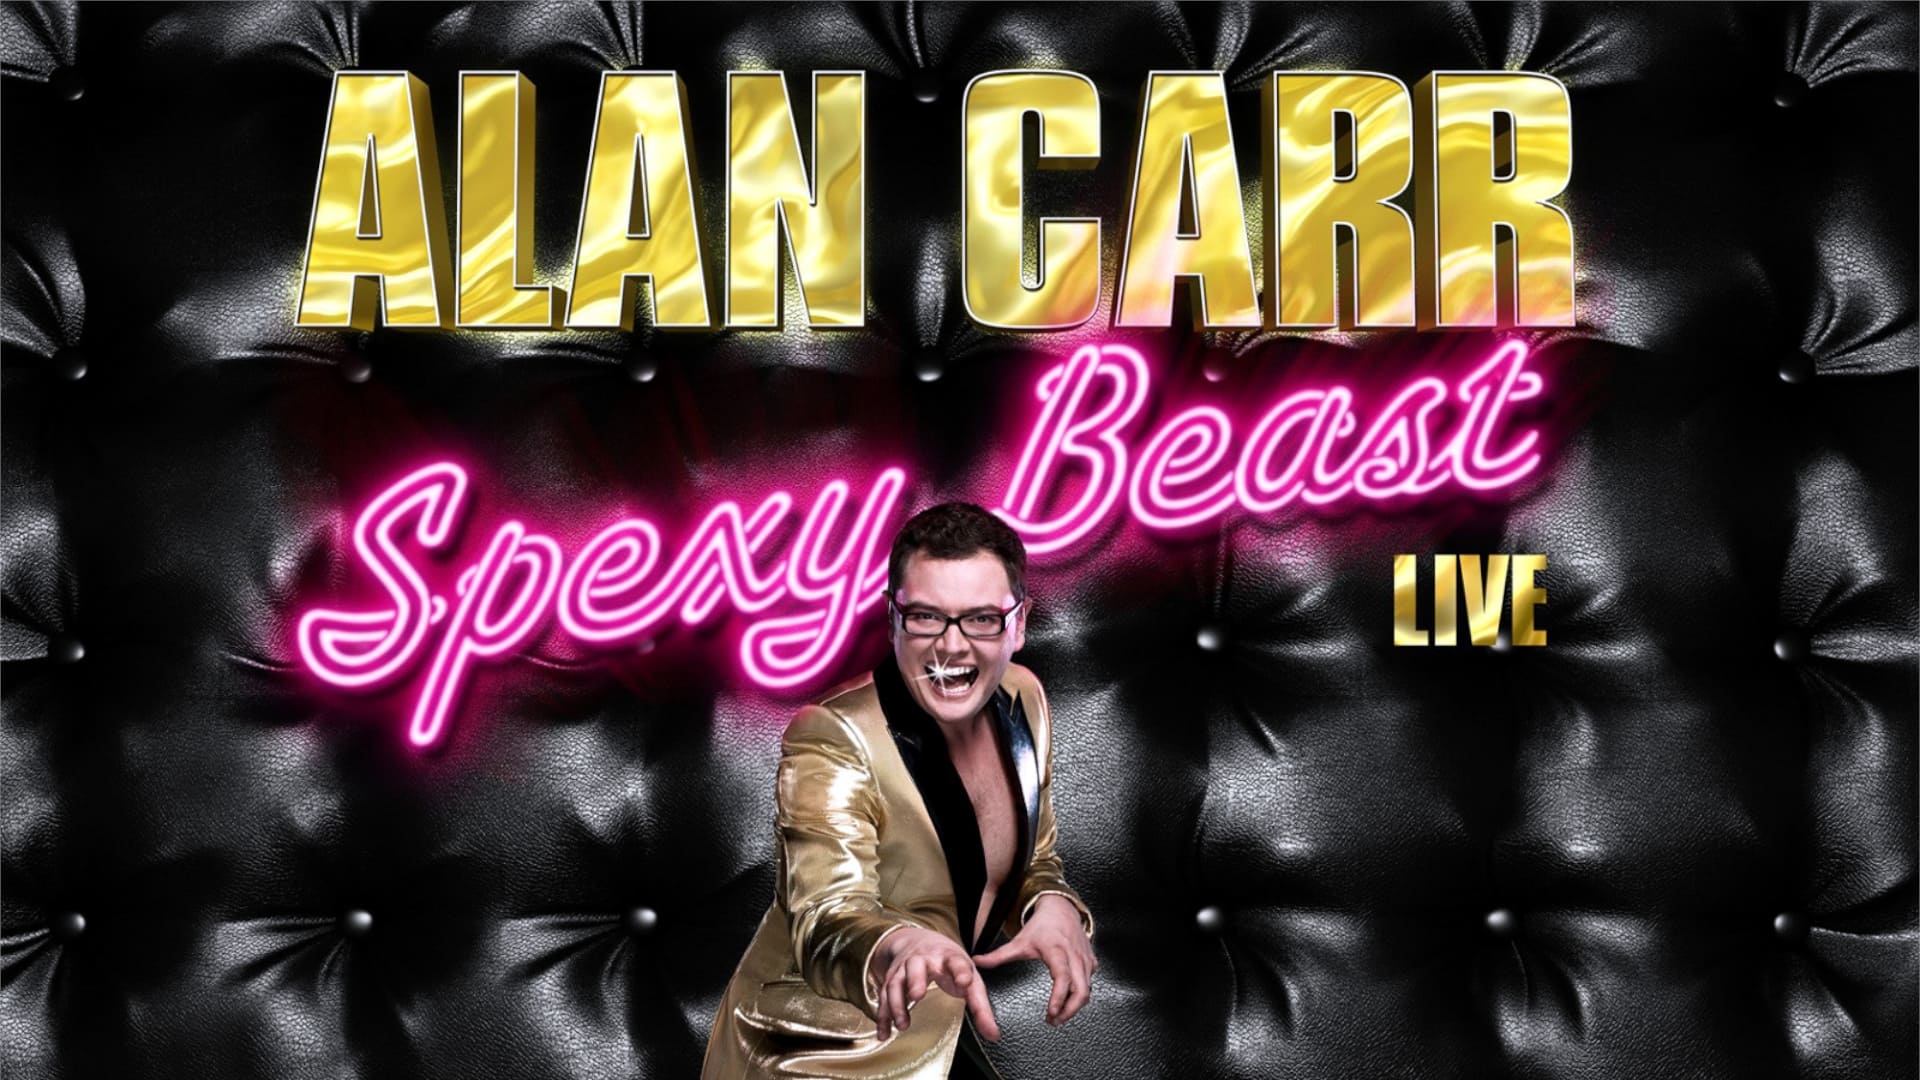 Alan Carr: Spexy Beast